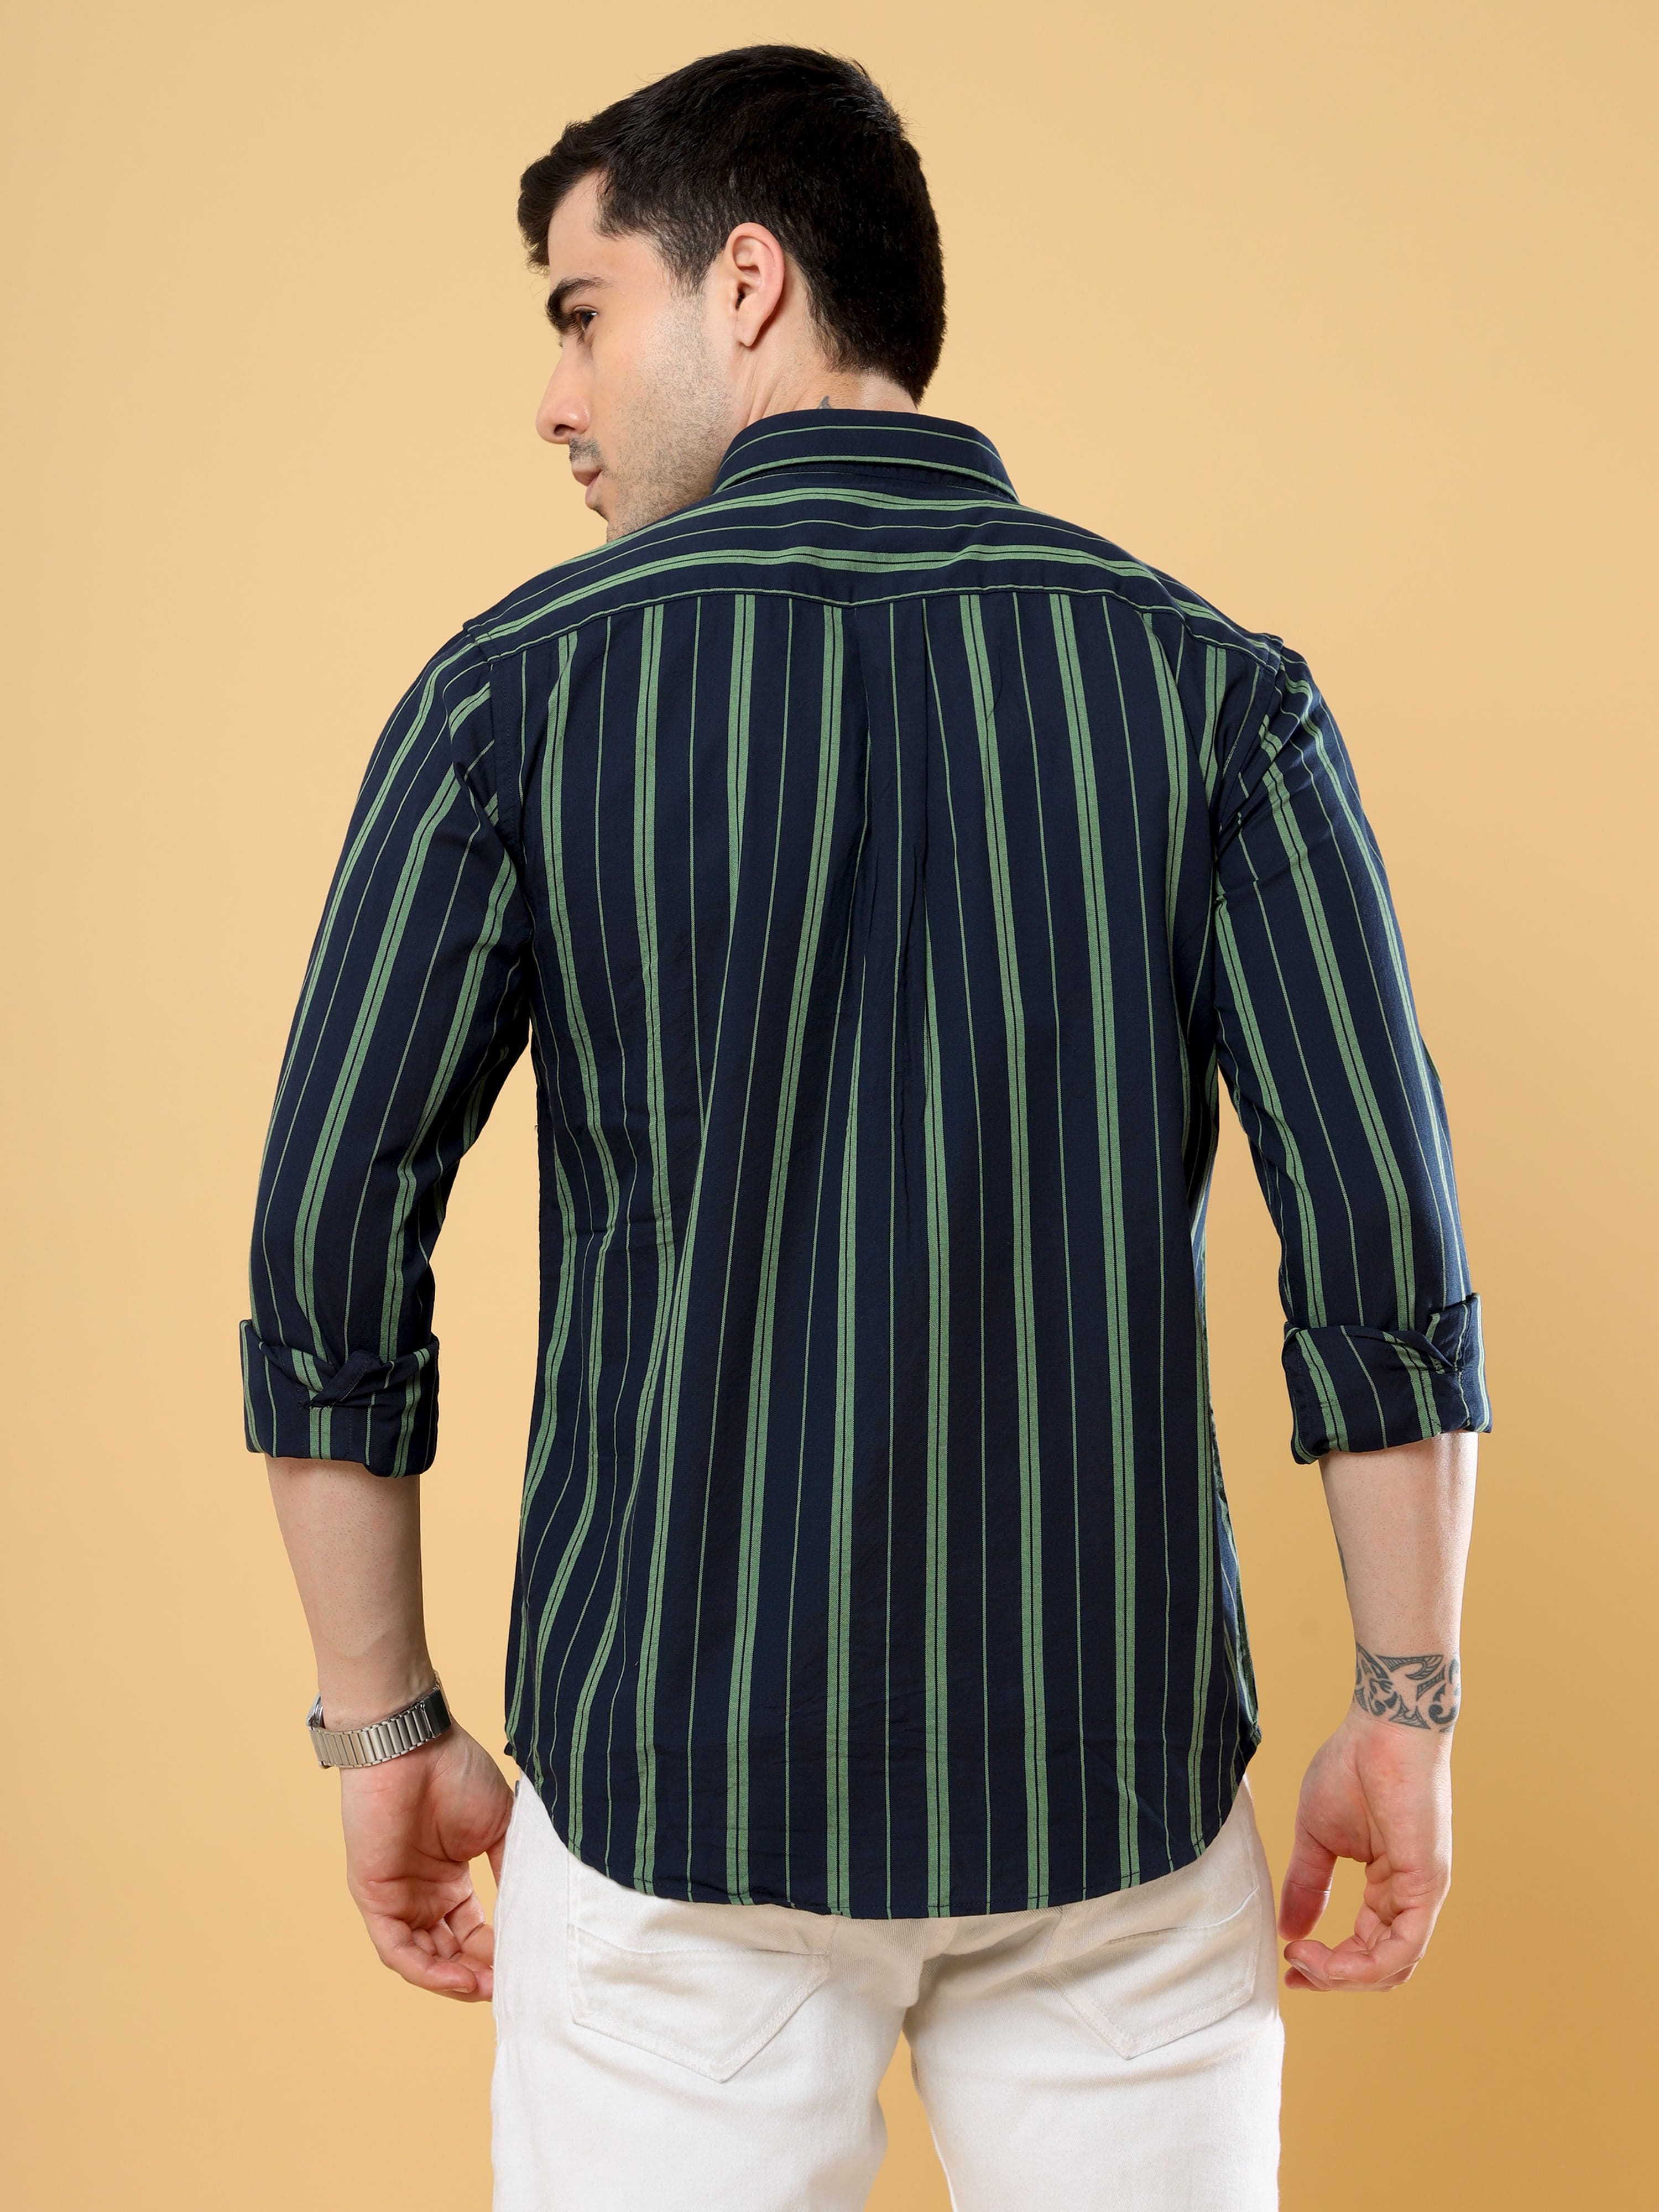 Buy Stylish Navy Blue Vertical Striped Shirt Mens IndiaRs. 1019.00